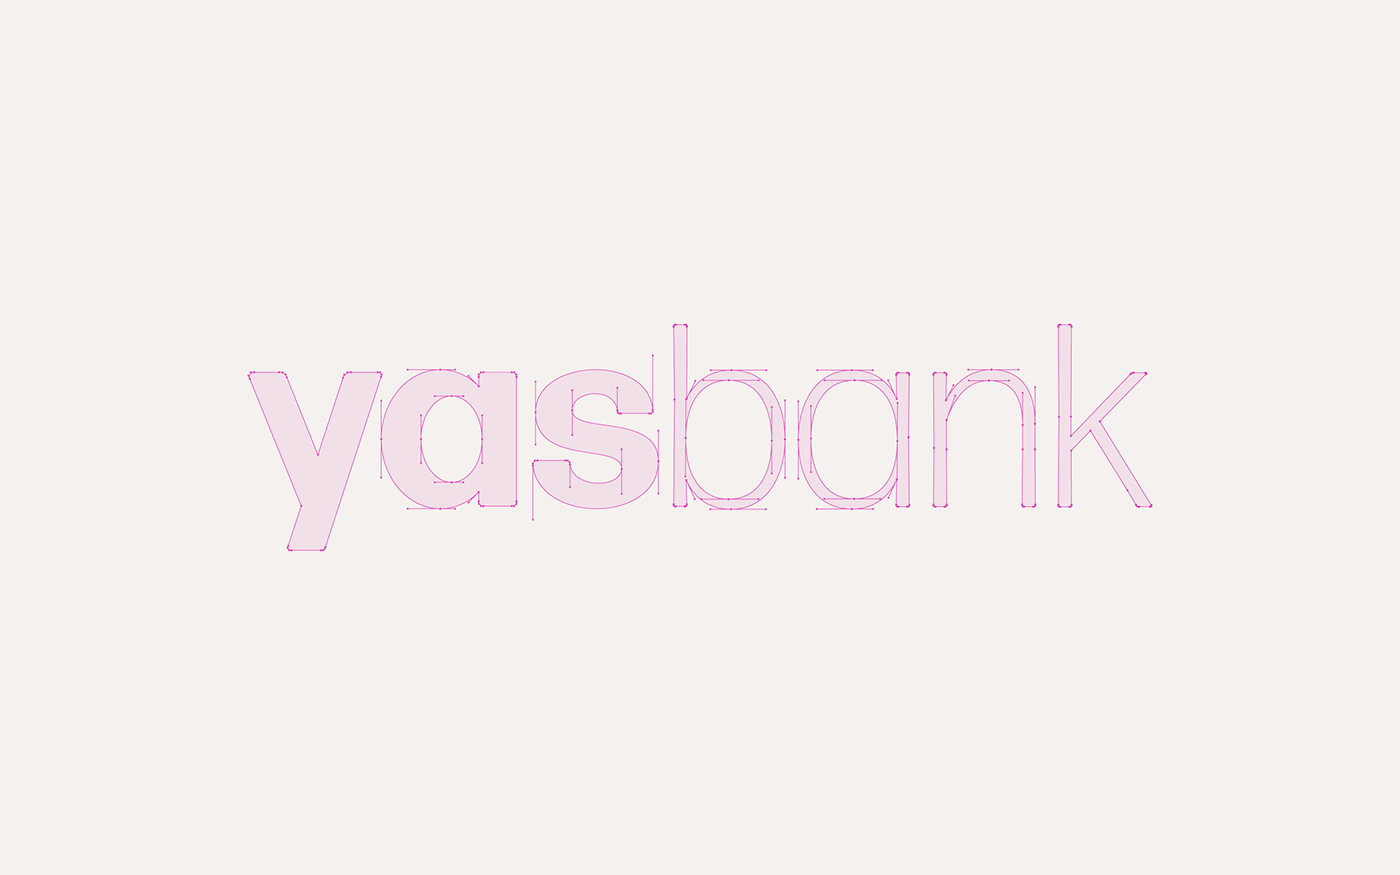 Stylized, minimalist Yasbank with grid of construction